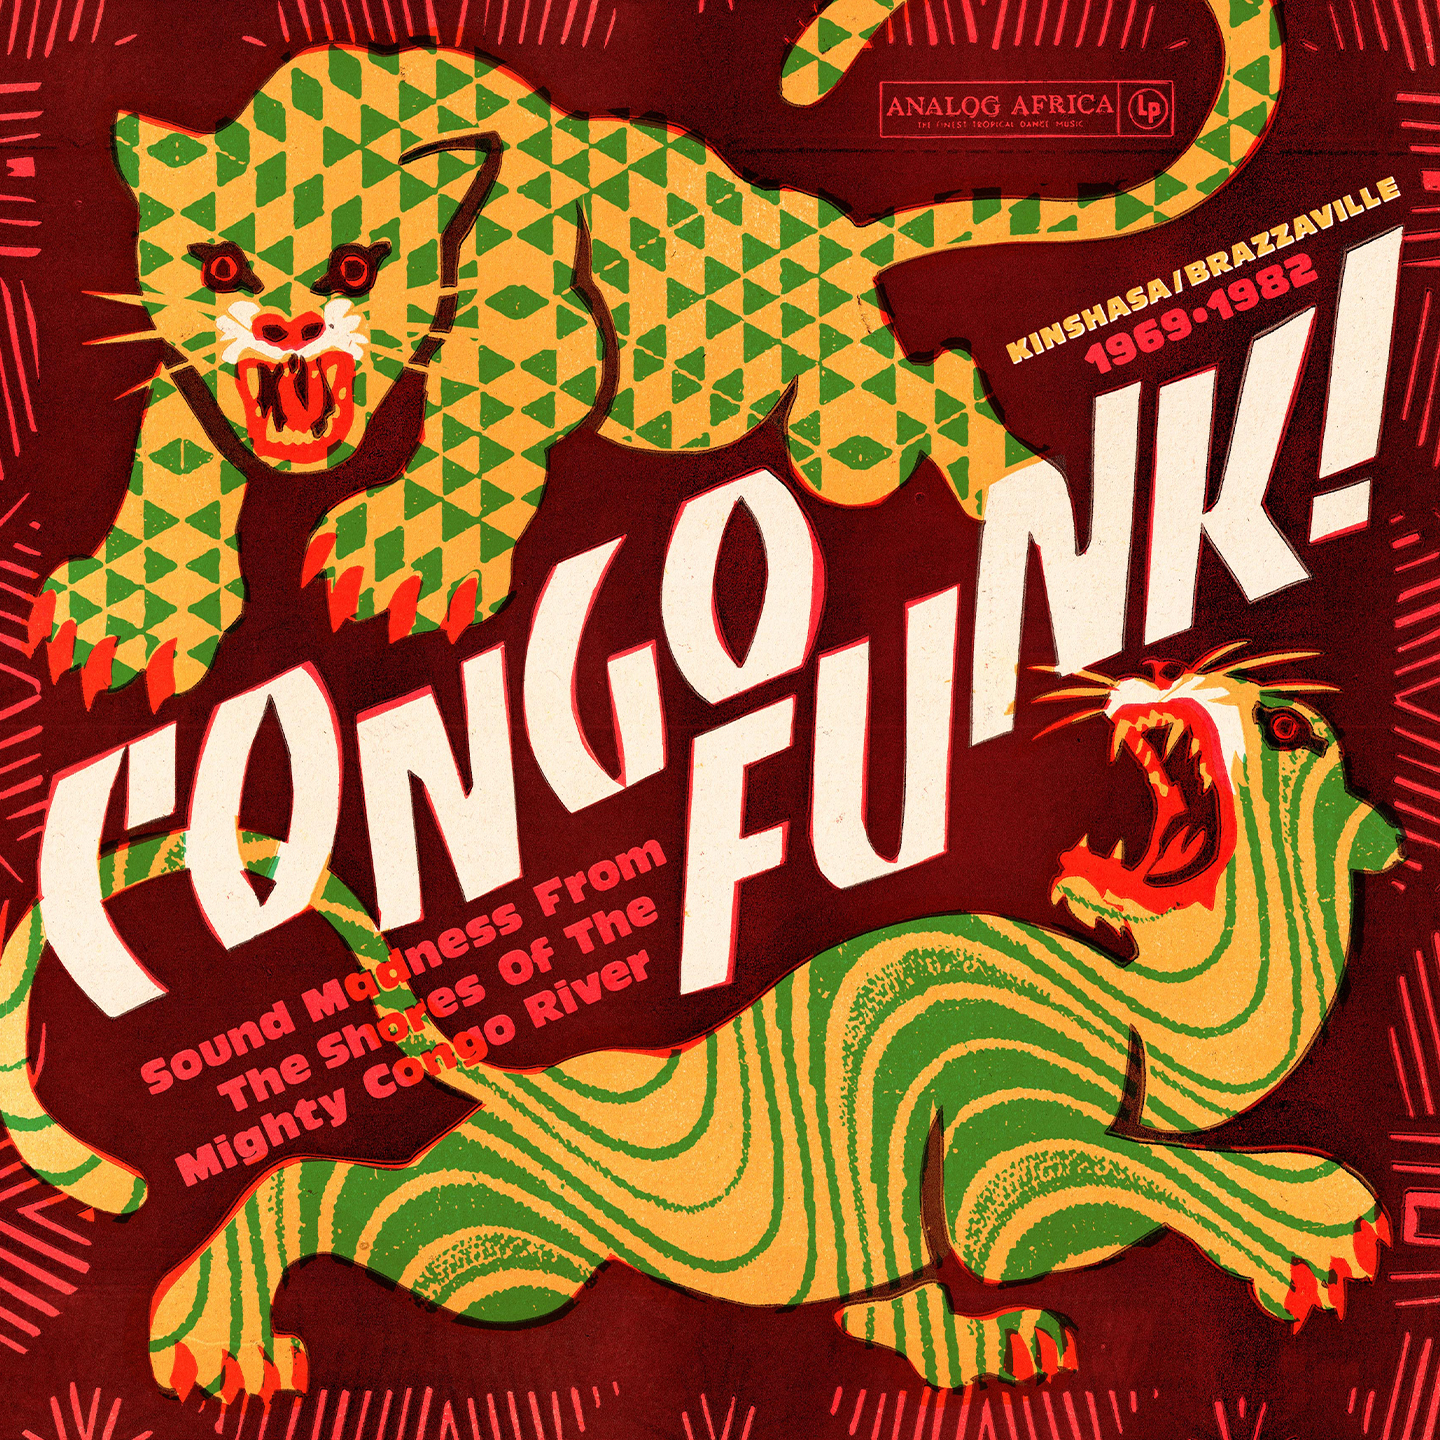 VA - CONGO FUNK! SOUND MADNESS FROM THE SHORES OF MIGHTY CONGO RIVER (KINSHASA_BRAZZAVILLE 1969-1982)